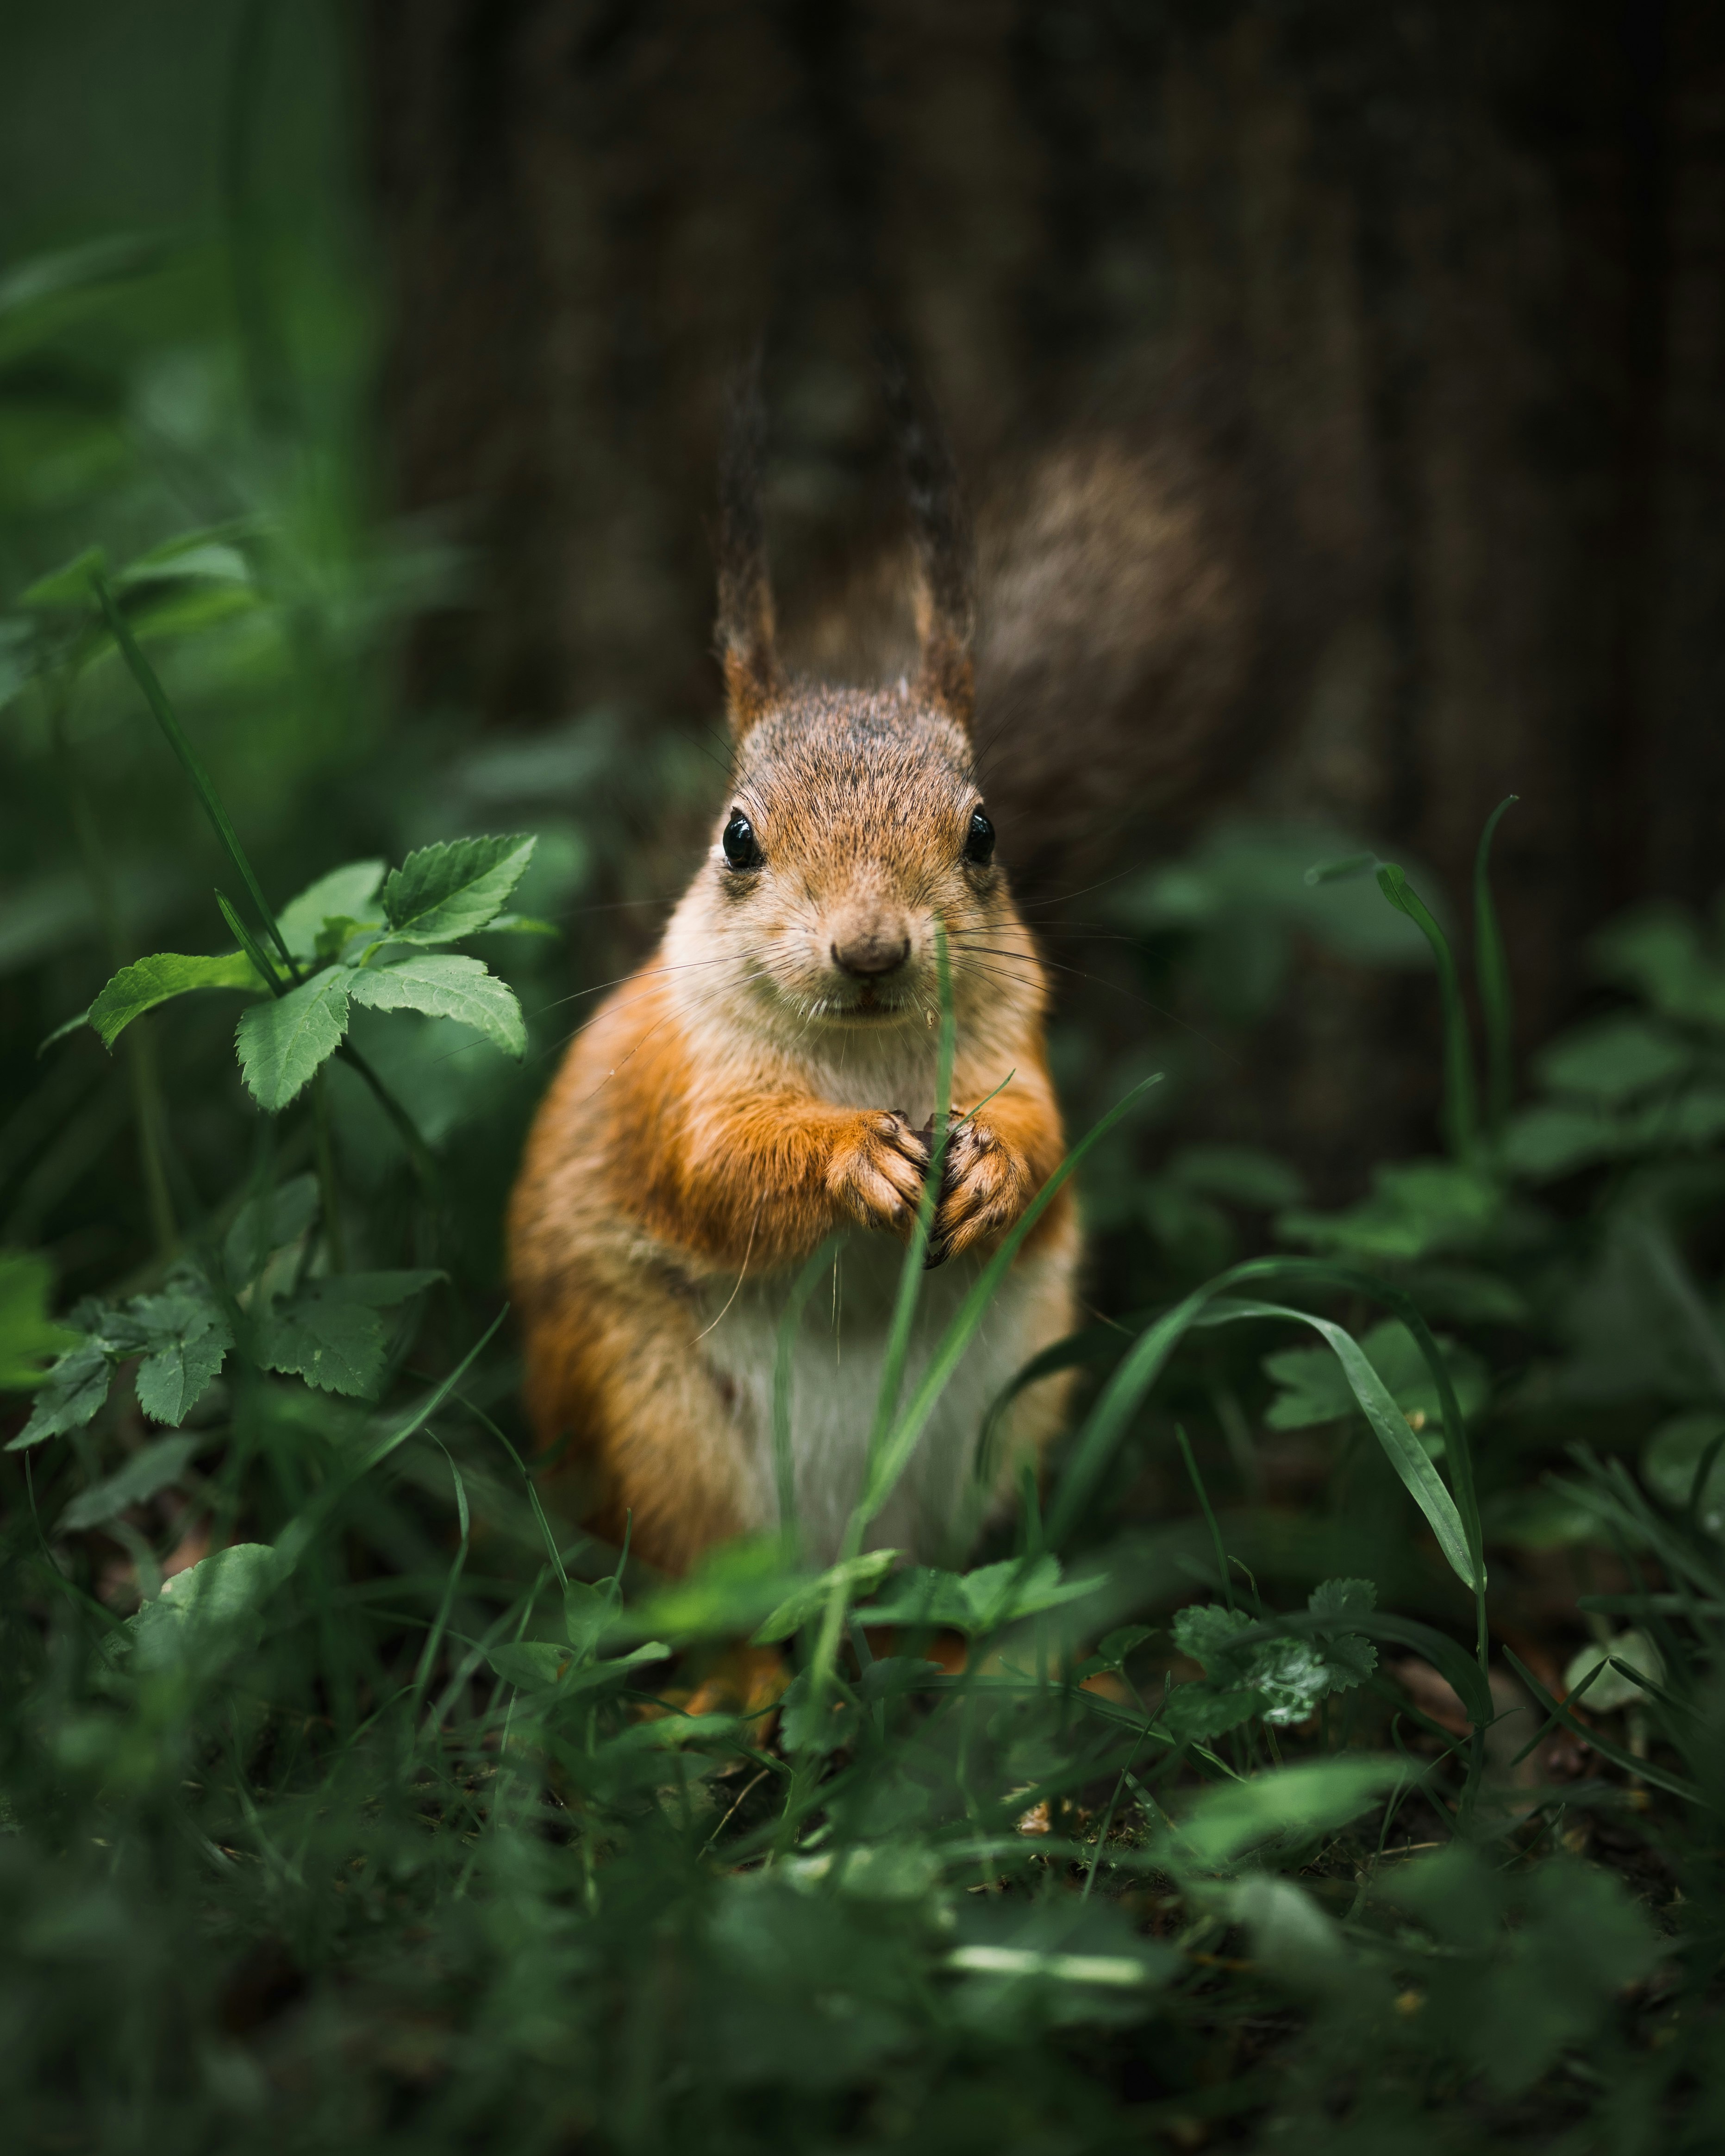 My favorite squirrel photo:)